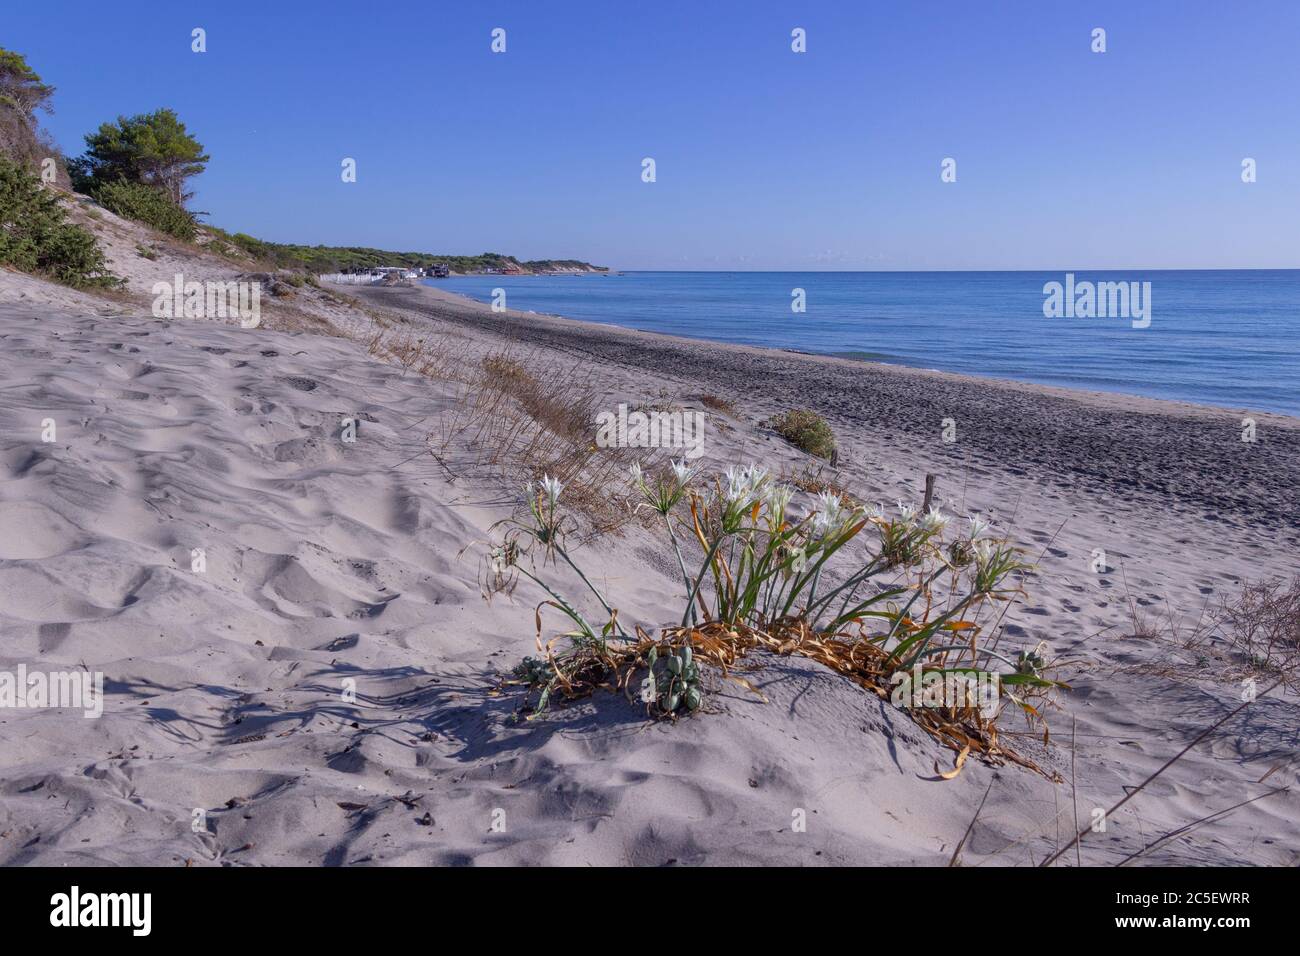 The most beautiful sand beaches of Apulia: Alimini bay, Salento coast. Italy (Lecce). Stock Photo